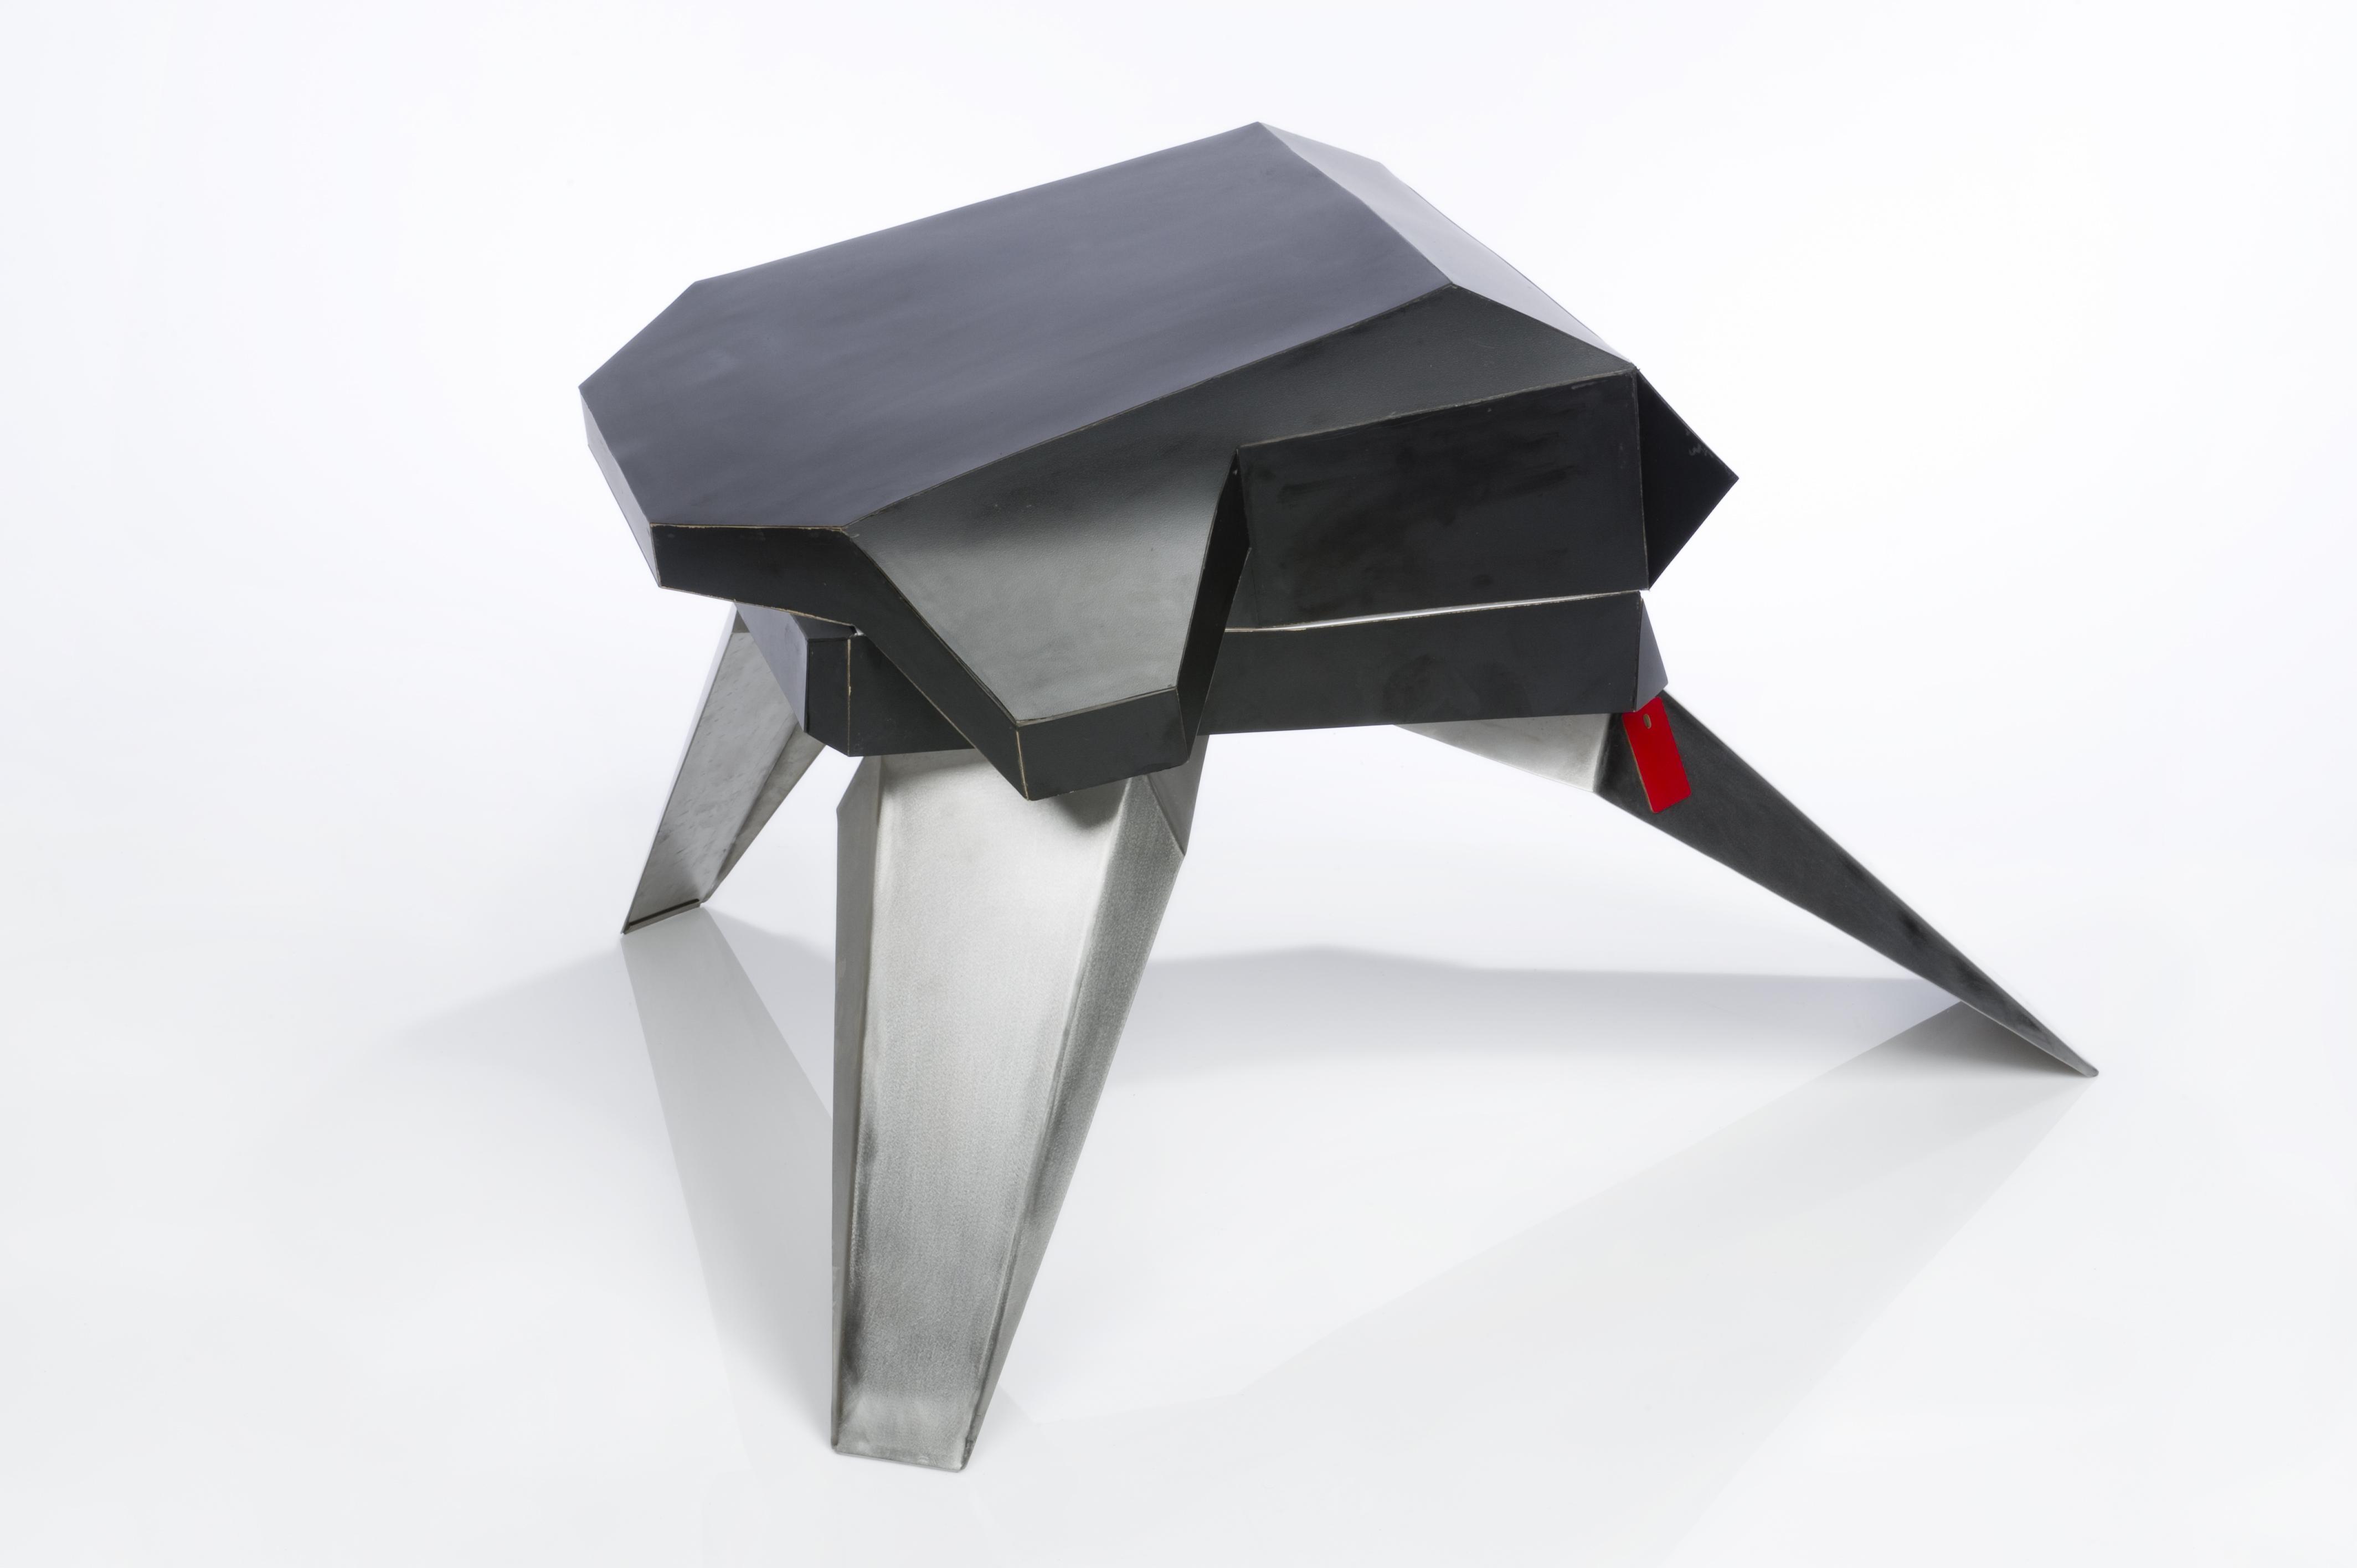 A foldable chair design.